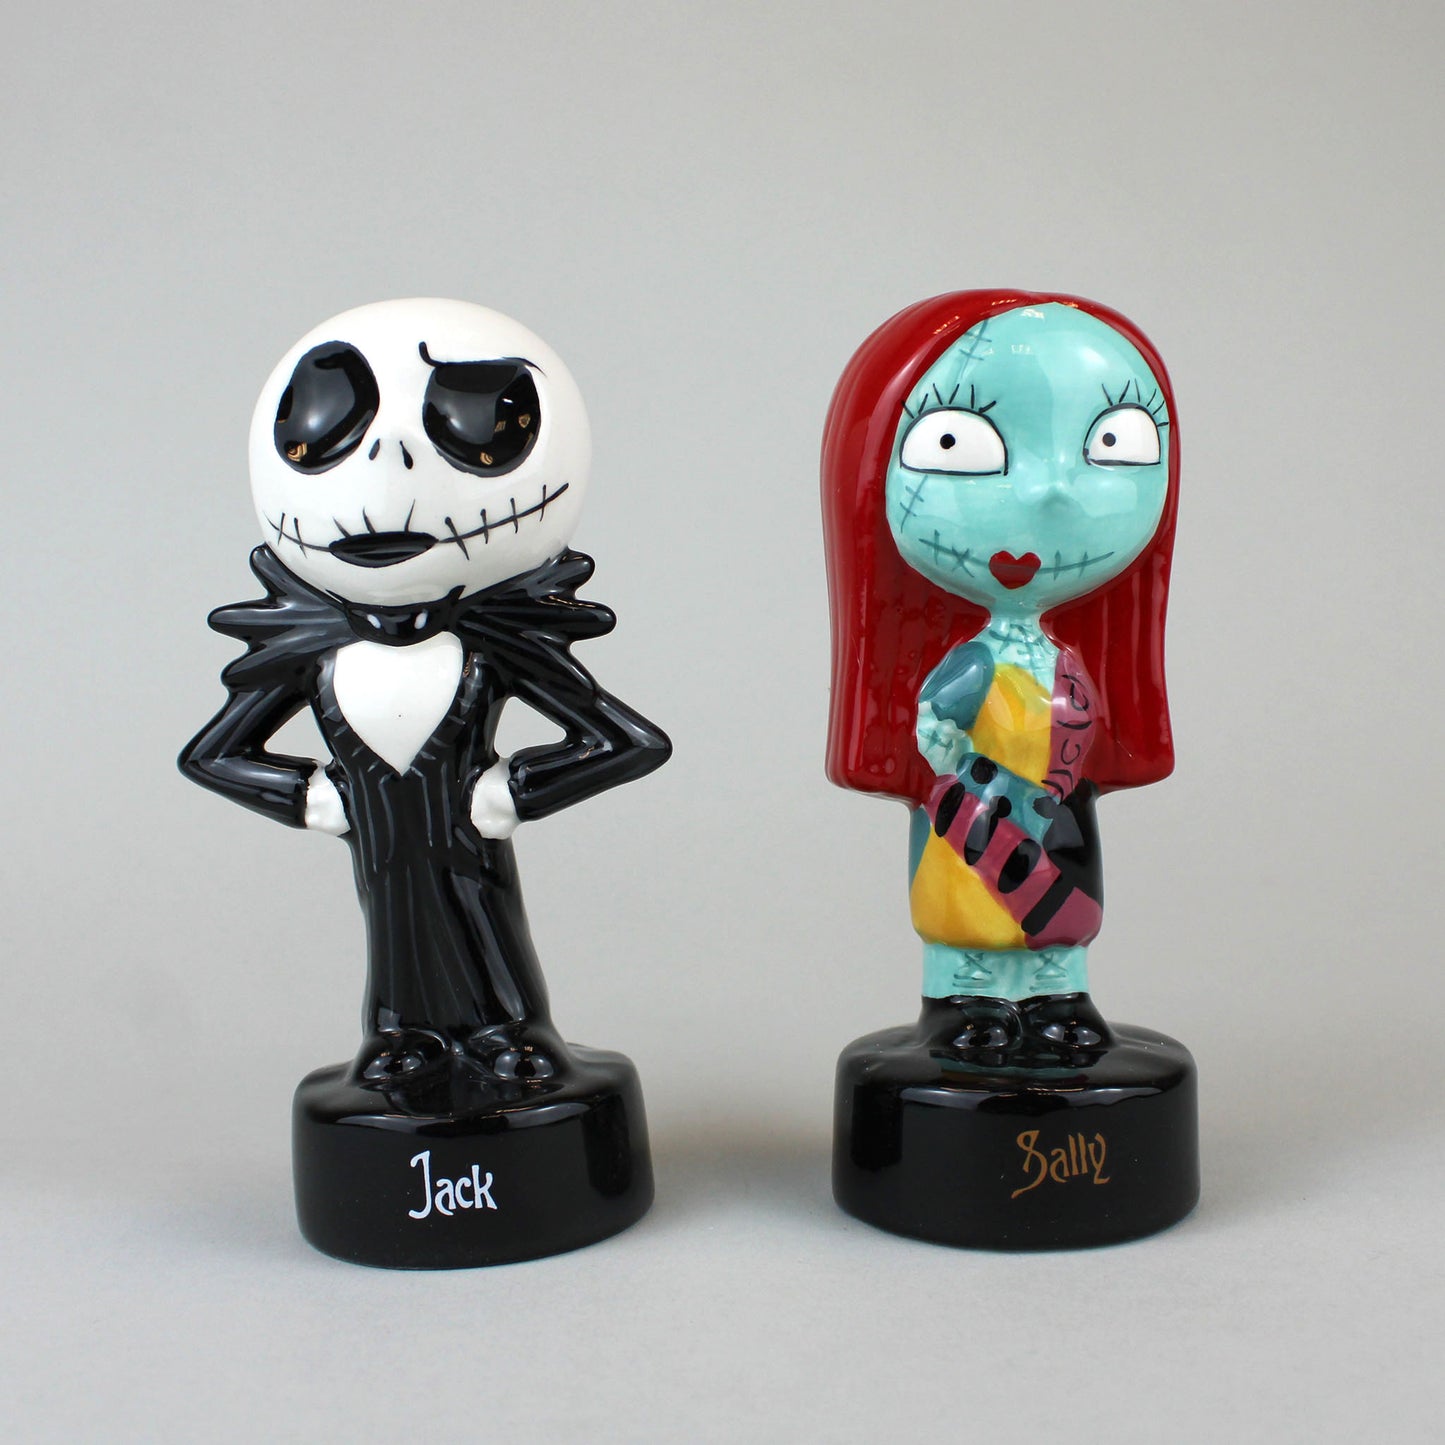 Jack And Sally (The Nightmare Before Christmas) Ceramic Salt & Pepper Shaker Set